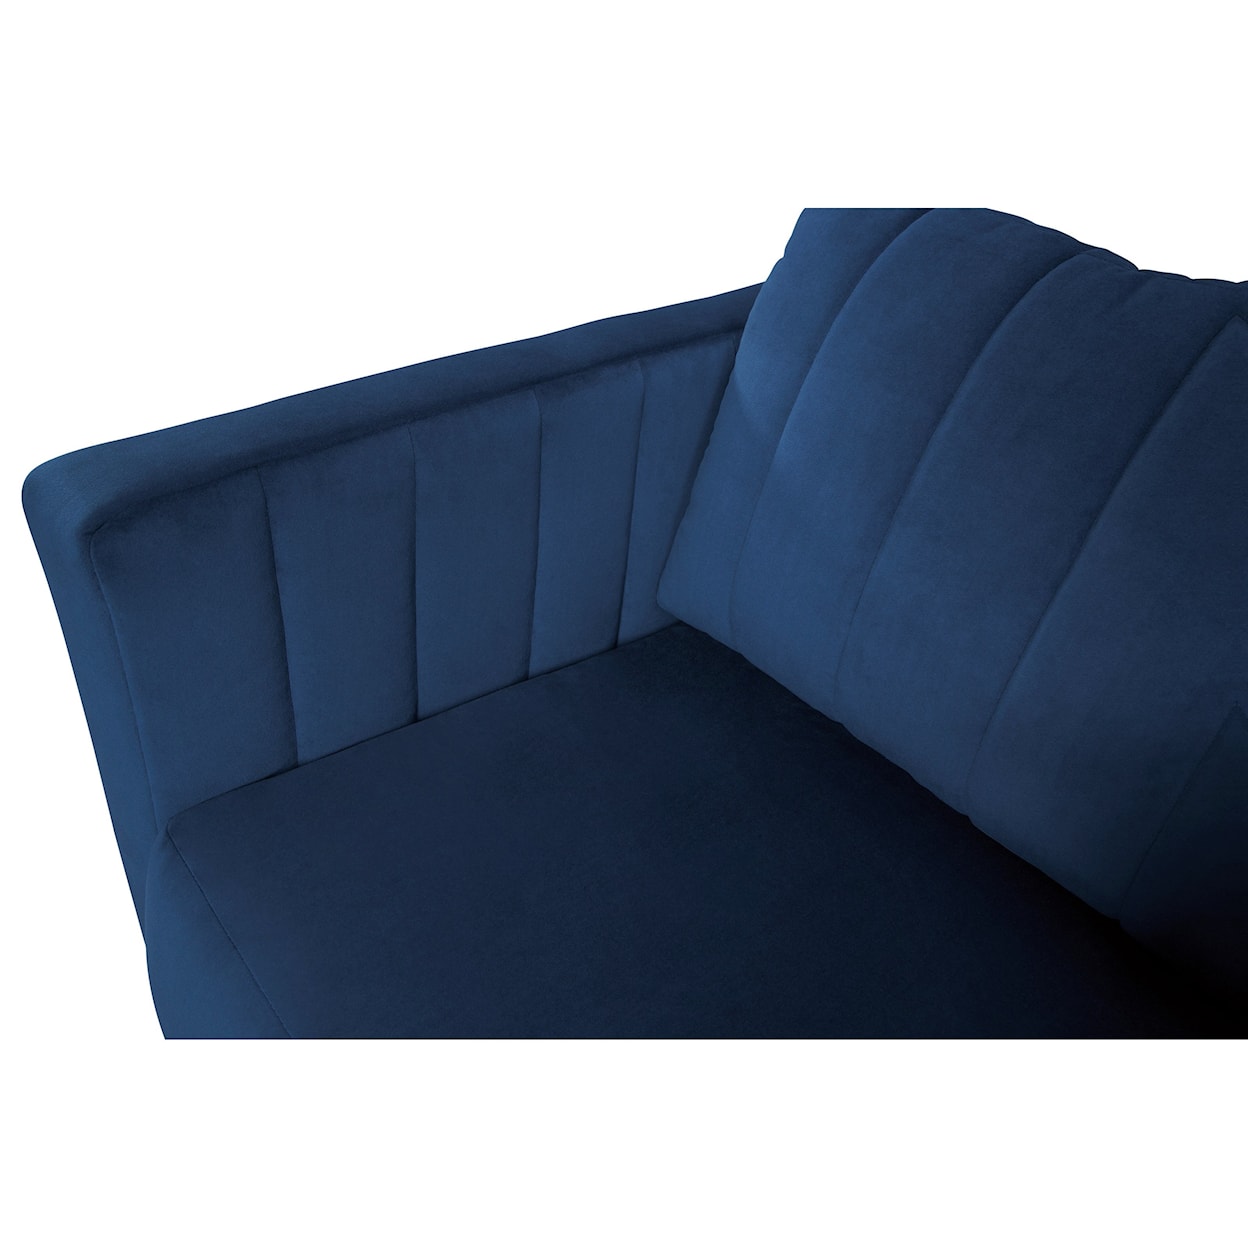 Ashley Furniture Signature Design Enderlin Swivel Accent Chair